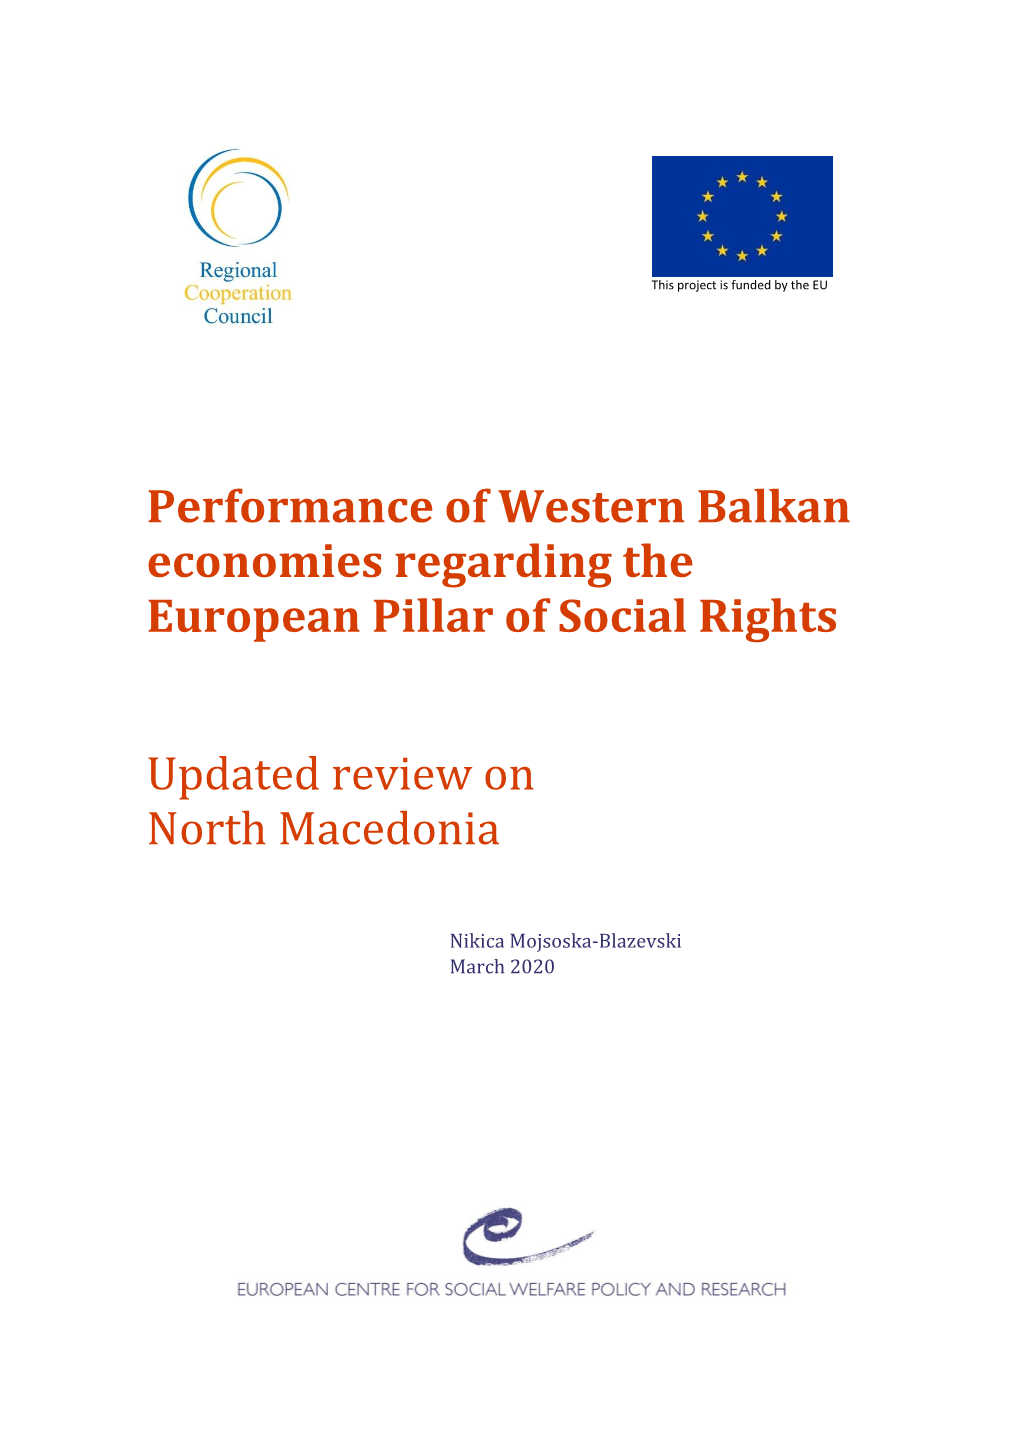 Performance of Western Balkan Economies Regarding the European Pillar of Social Rights